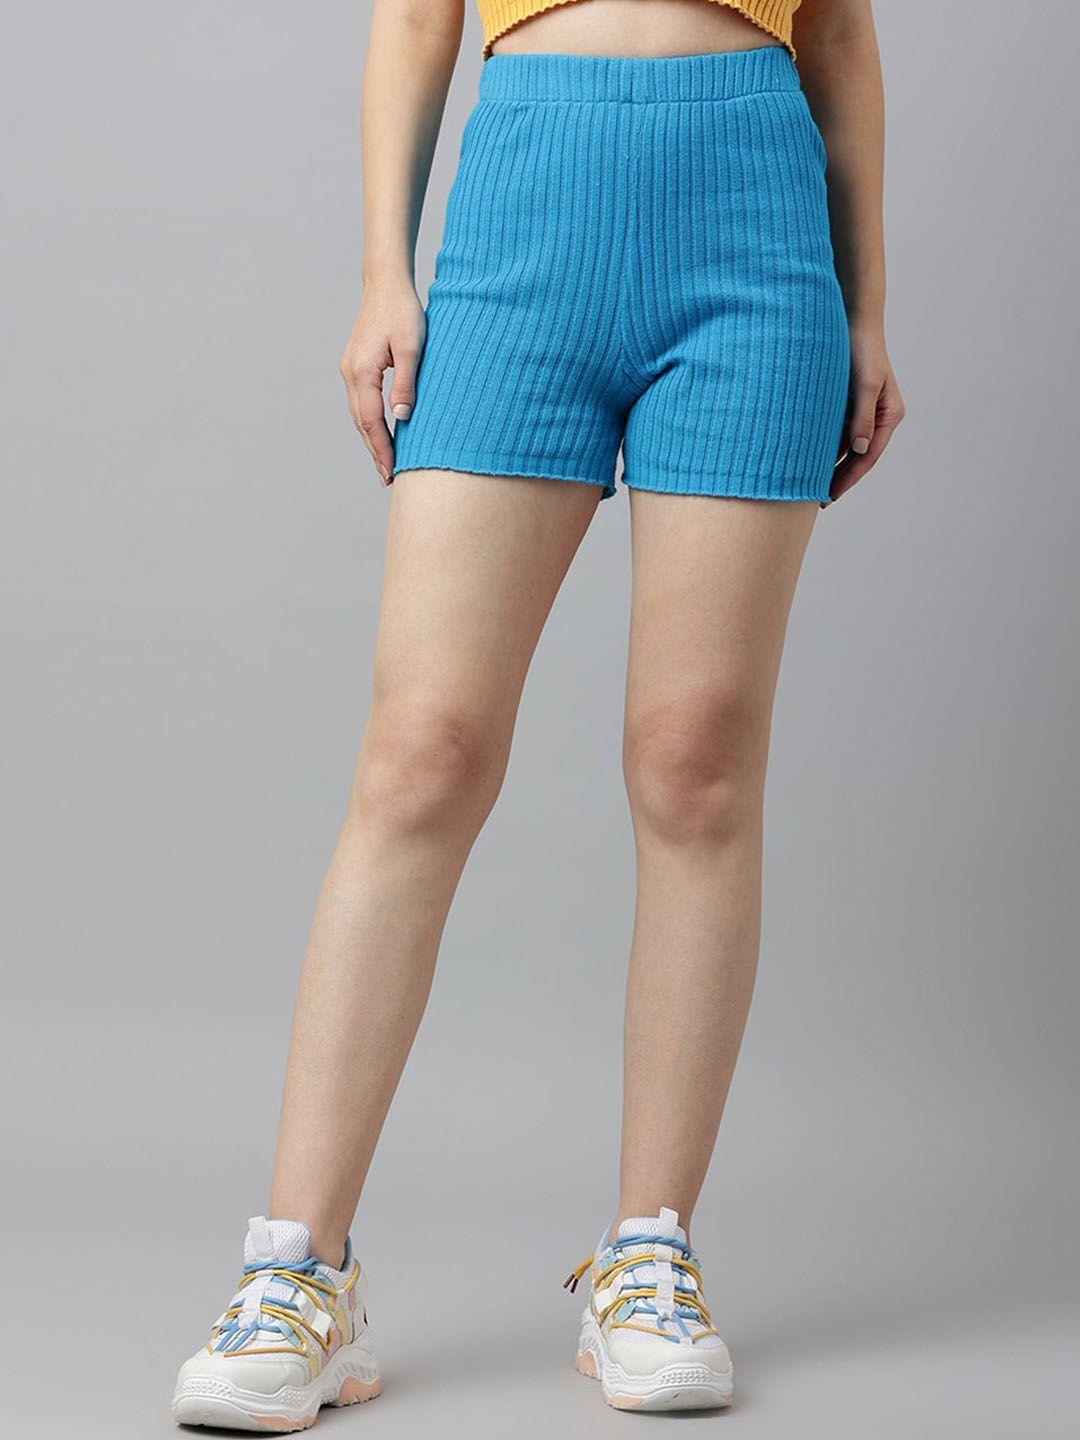 pritla women blue striped cotton training or gym shorts